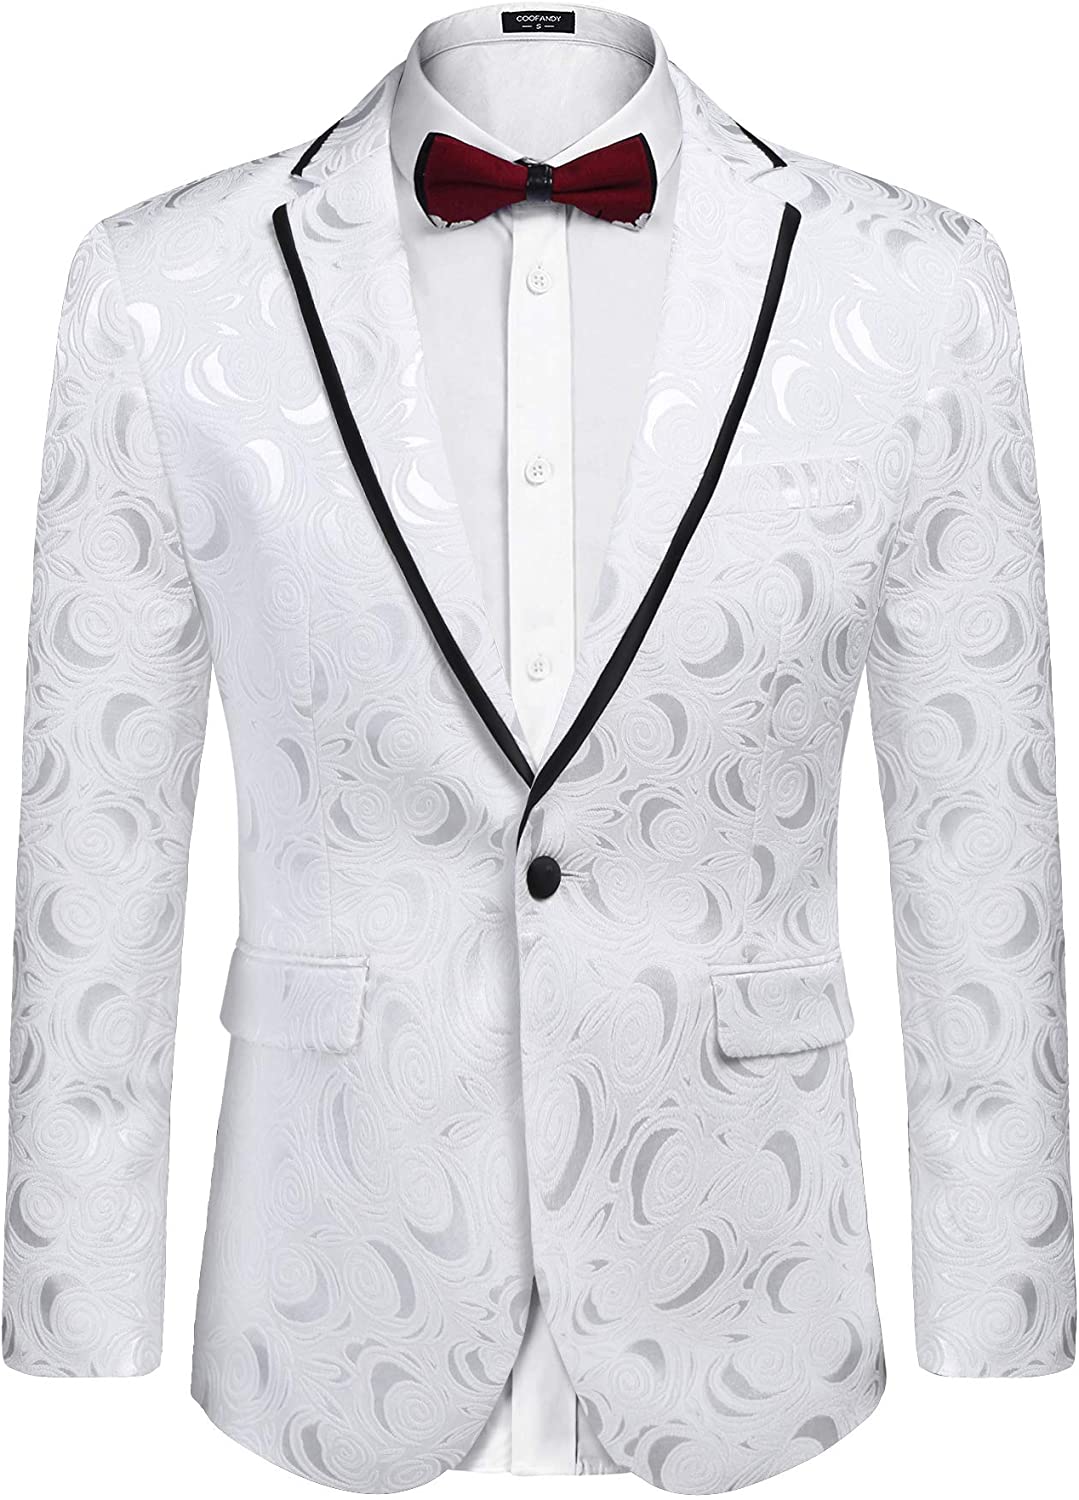 COOFANDY Men's Floral Suit Jacket Embroidered Wedding Blazer Party Dinner Tuxedo 